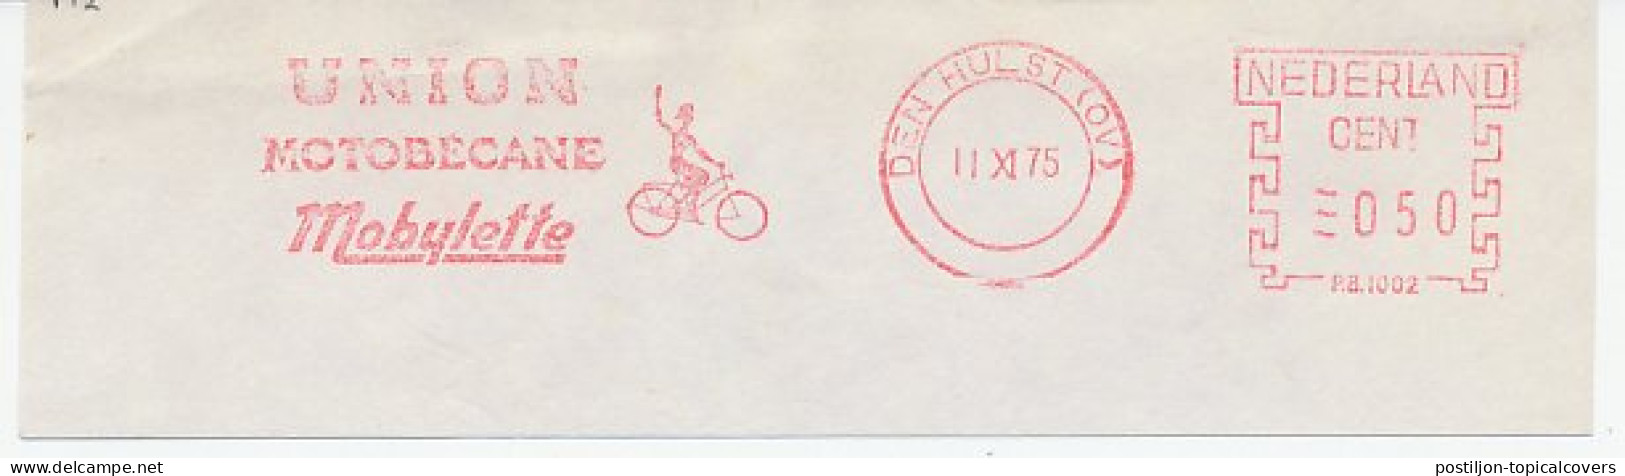 Meter Cut Netherlands 1975 Bicycle - Union - Motobecane - Mobylette - Wielrennen